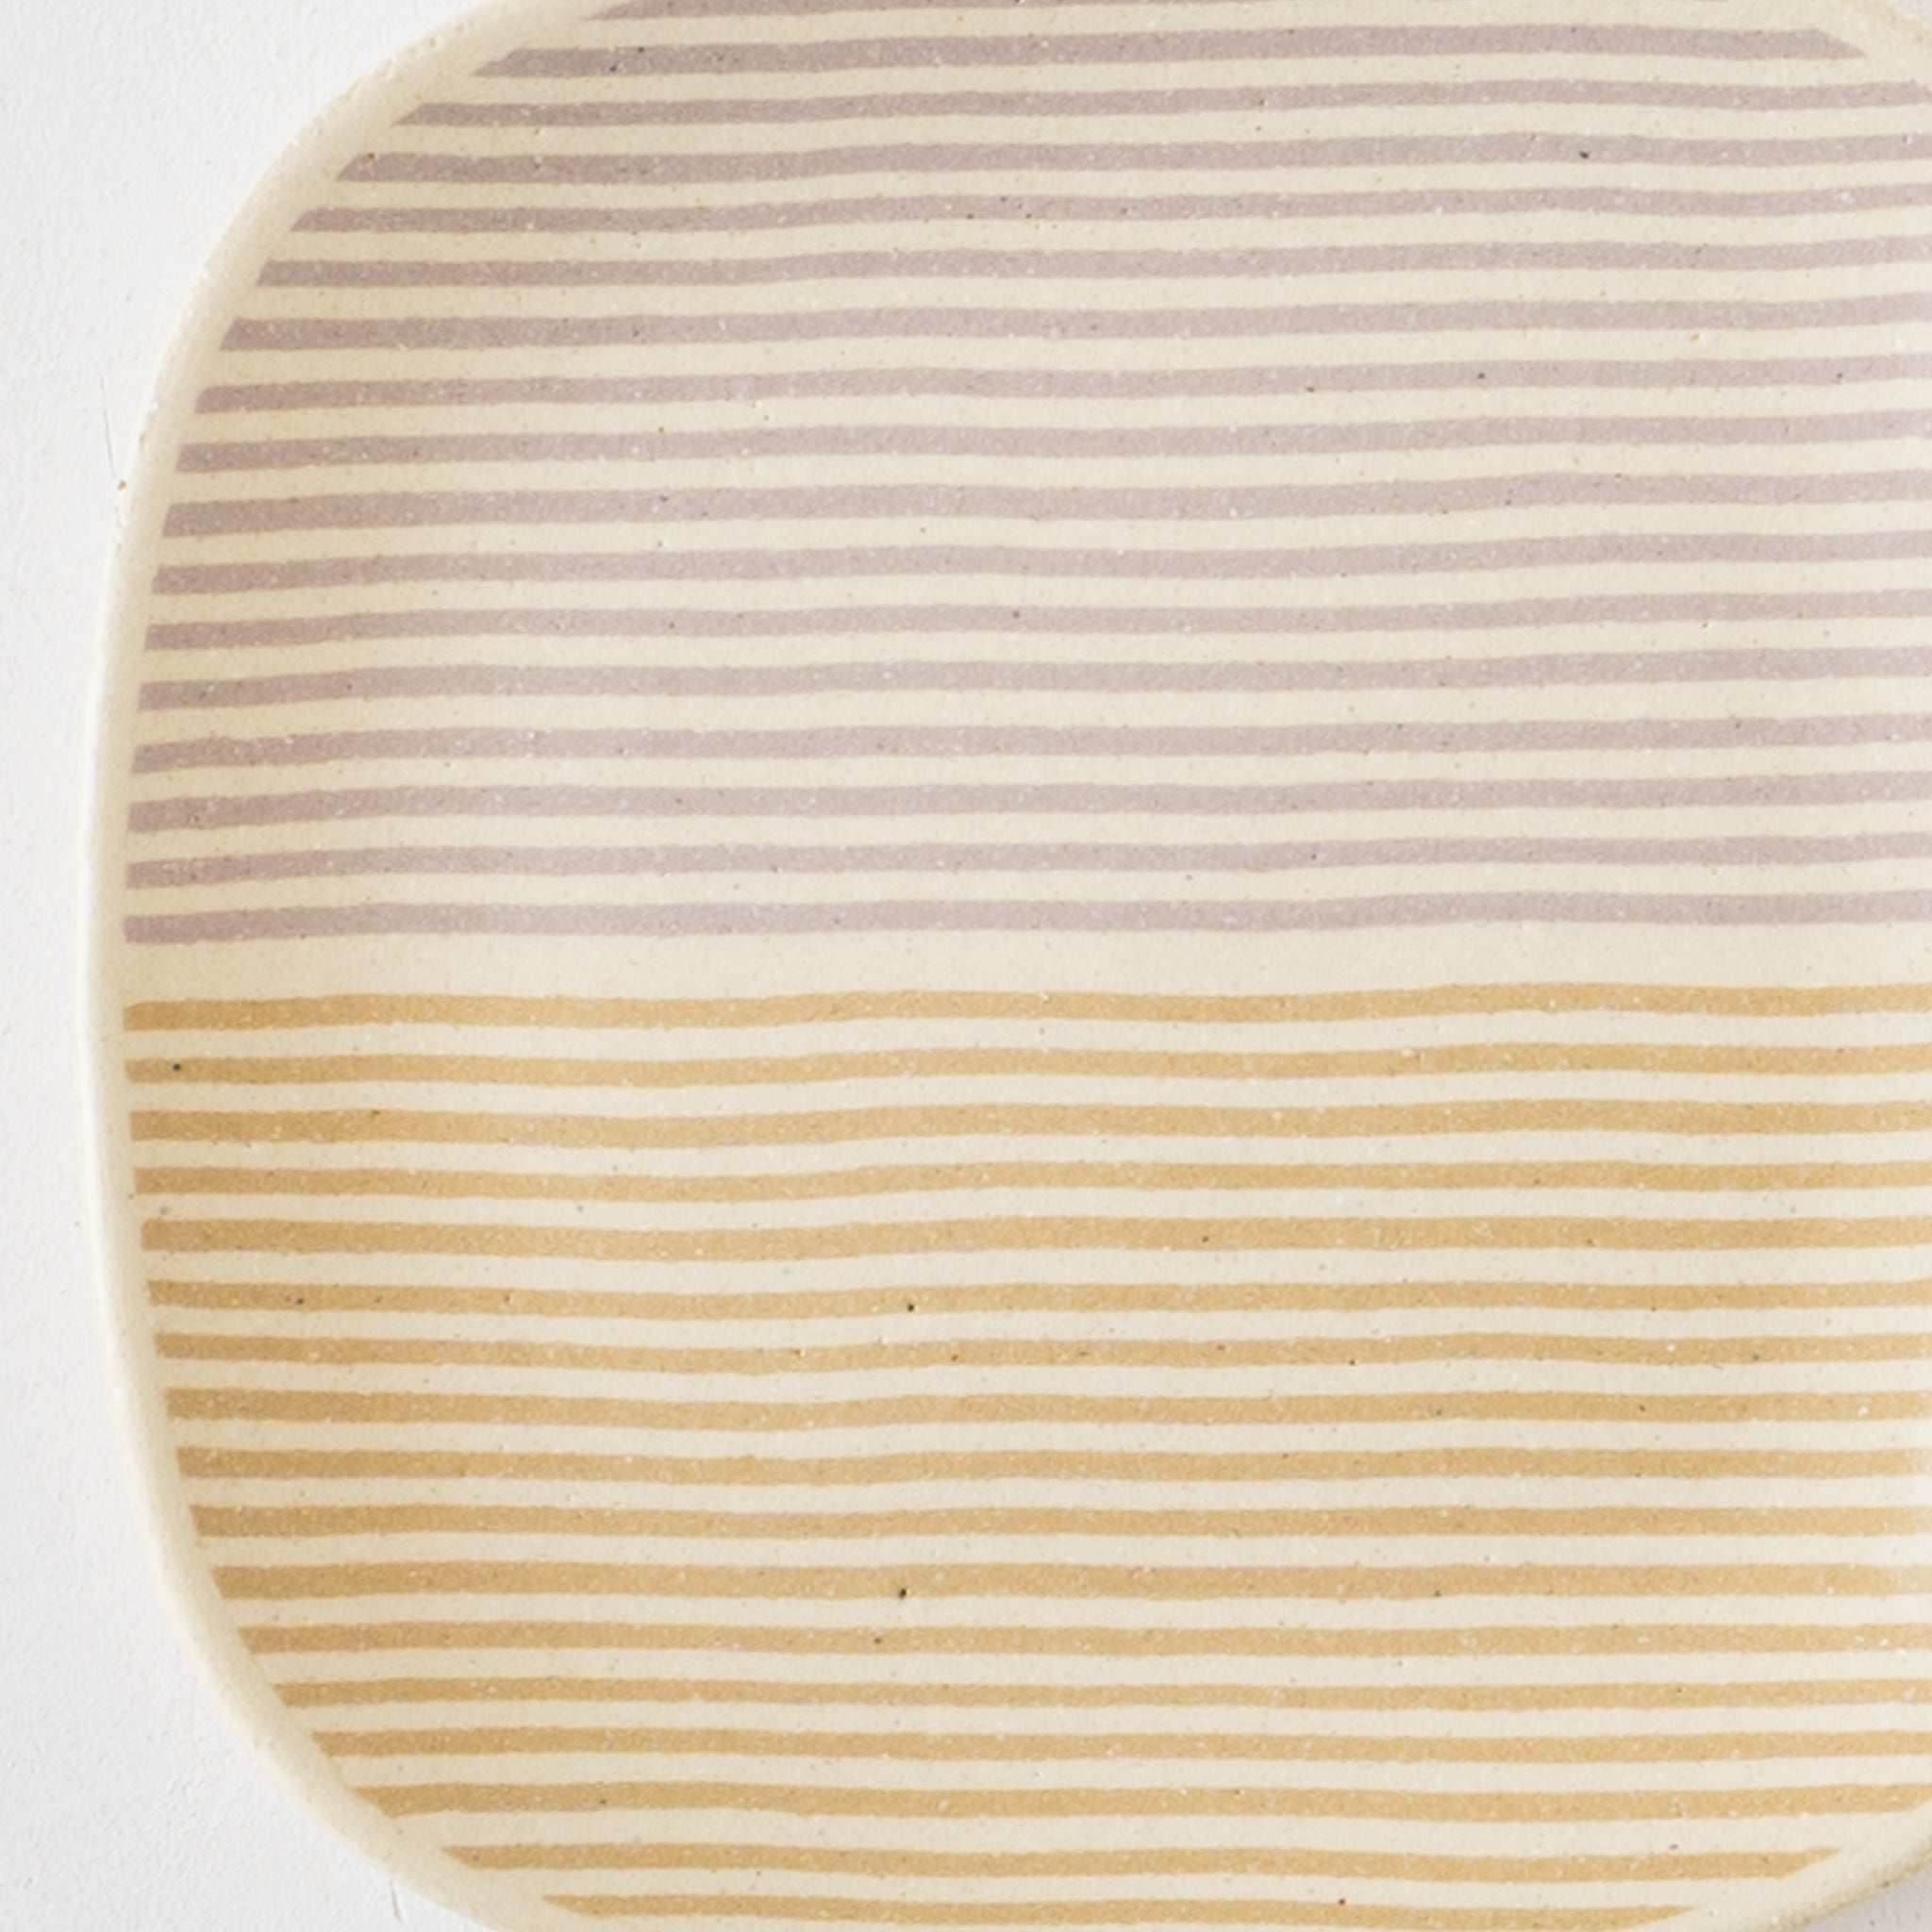 Hanako Sakamoto's four-sided plate with cute two-tone colors